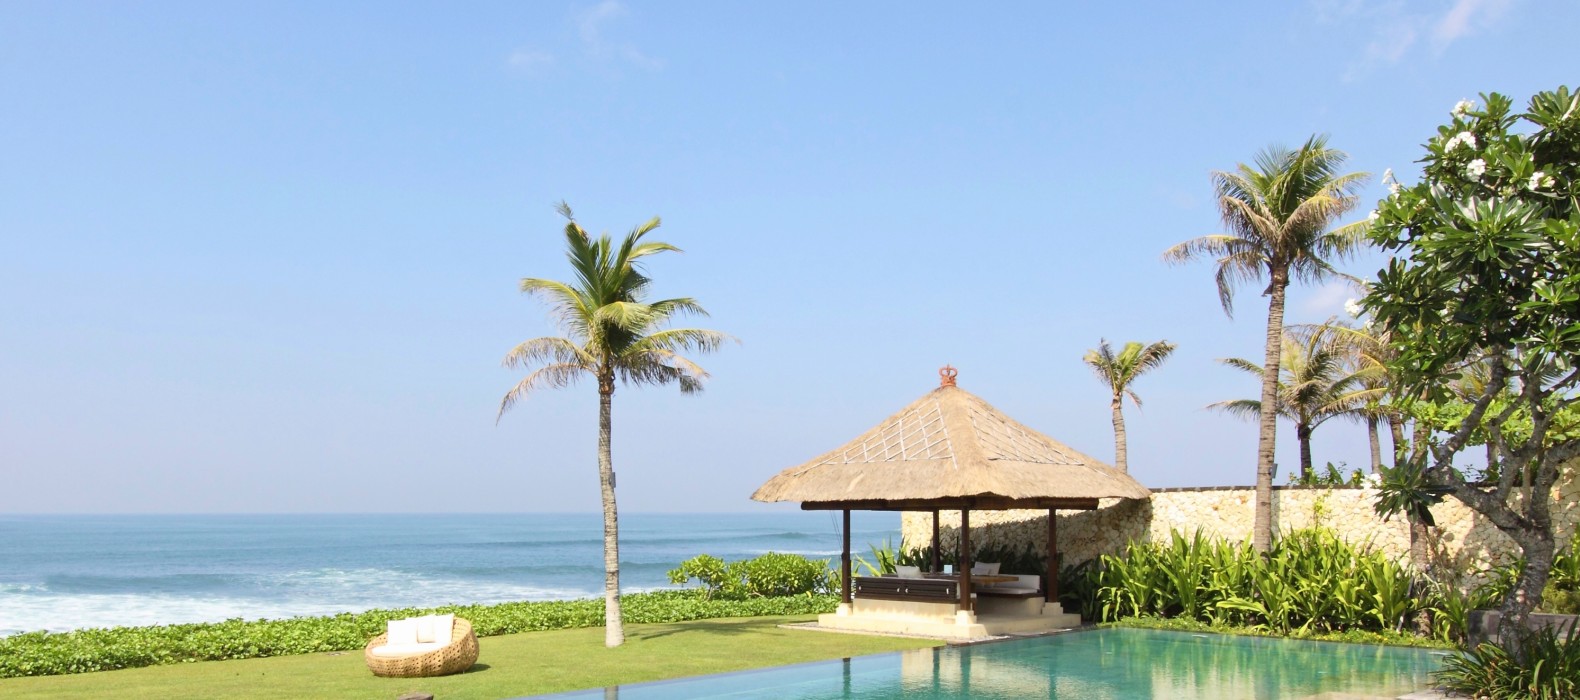 Exterior pool view of Villa Nava in Bali